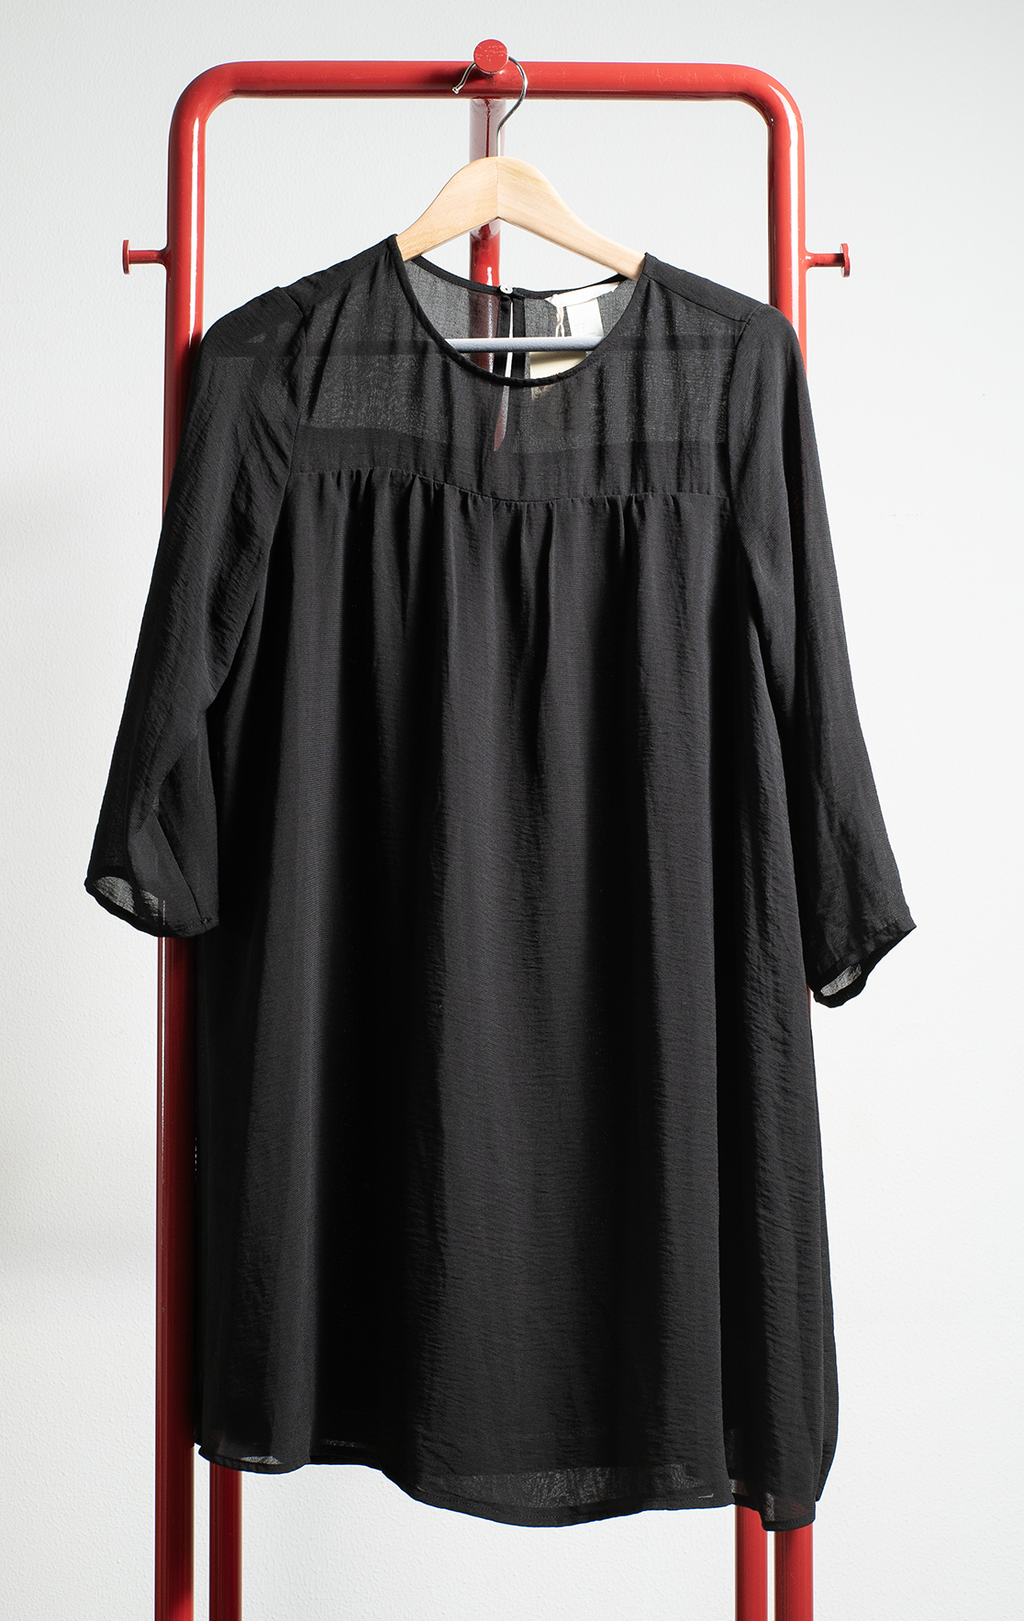 H&M DRESS - Black see through - Small